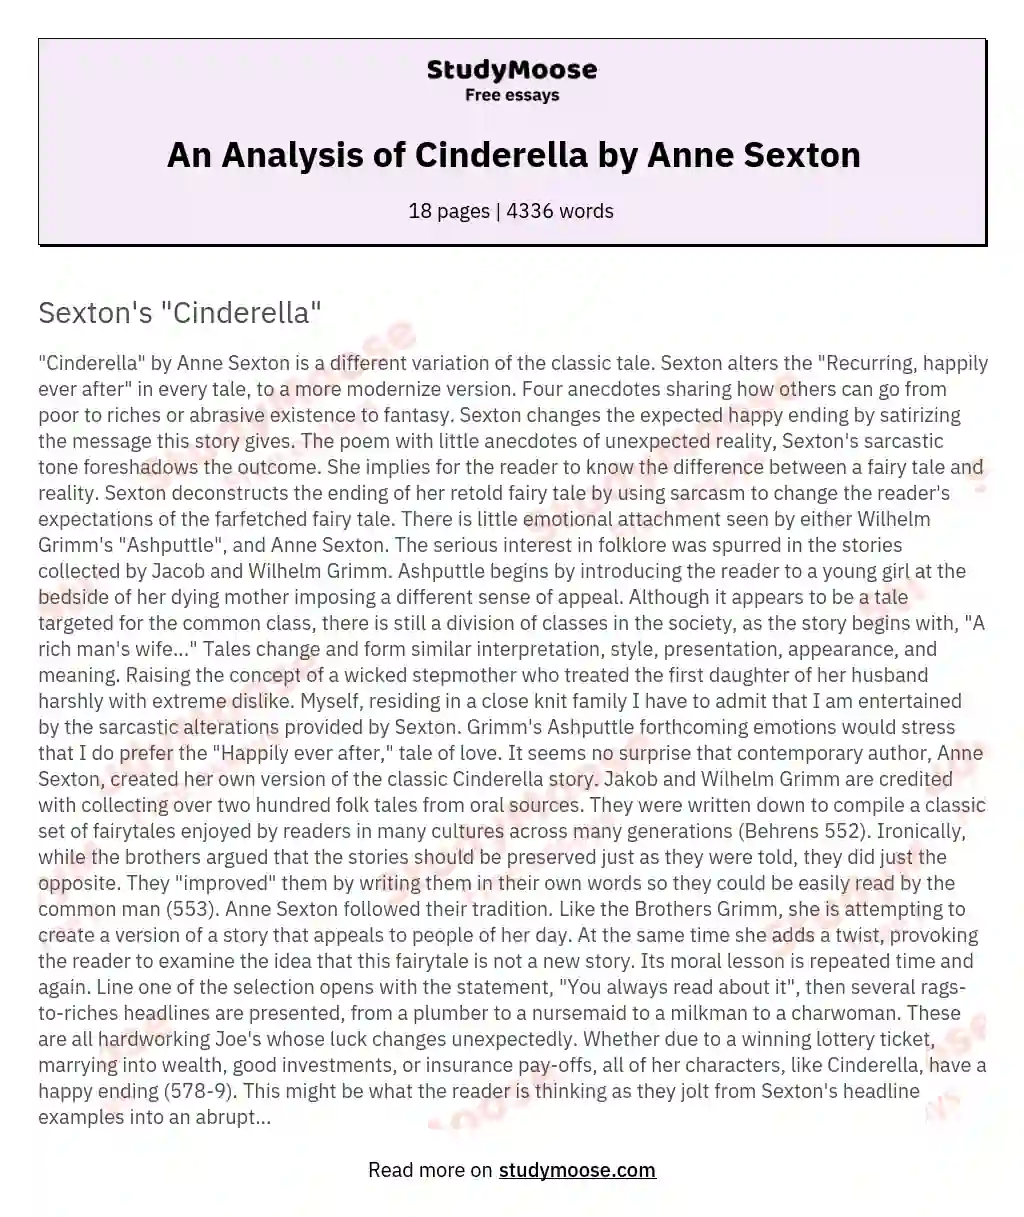 An Analysis of Cinderella by Anne Sexton essay